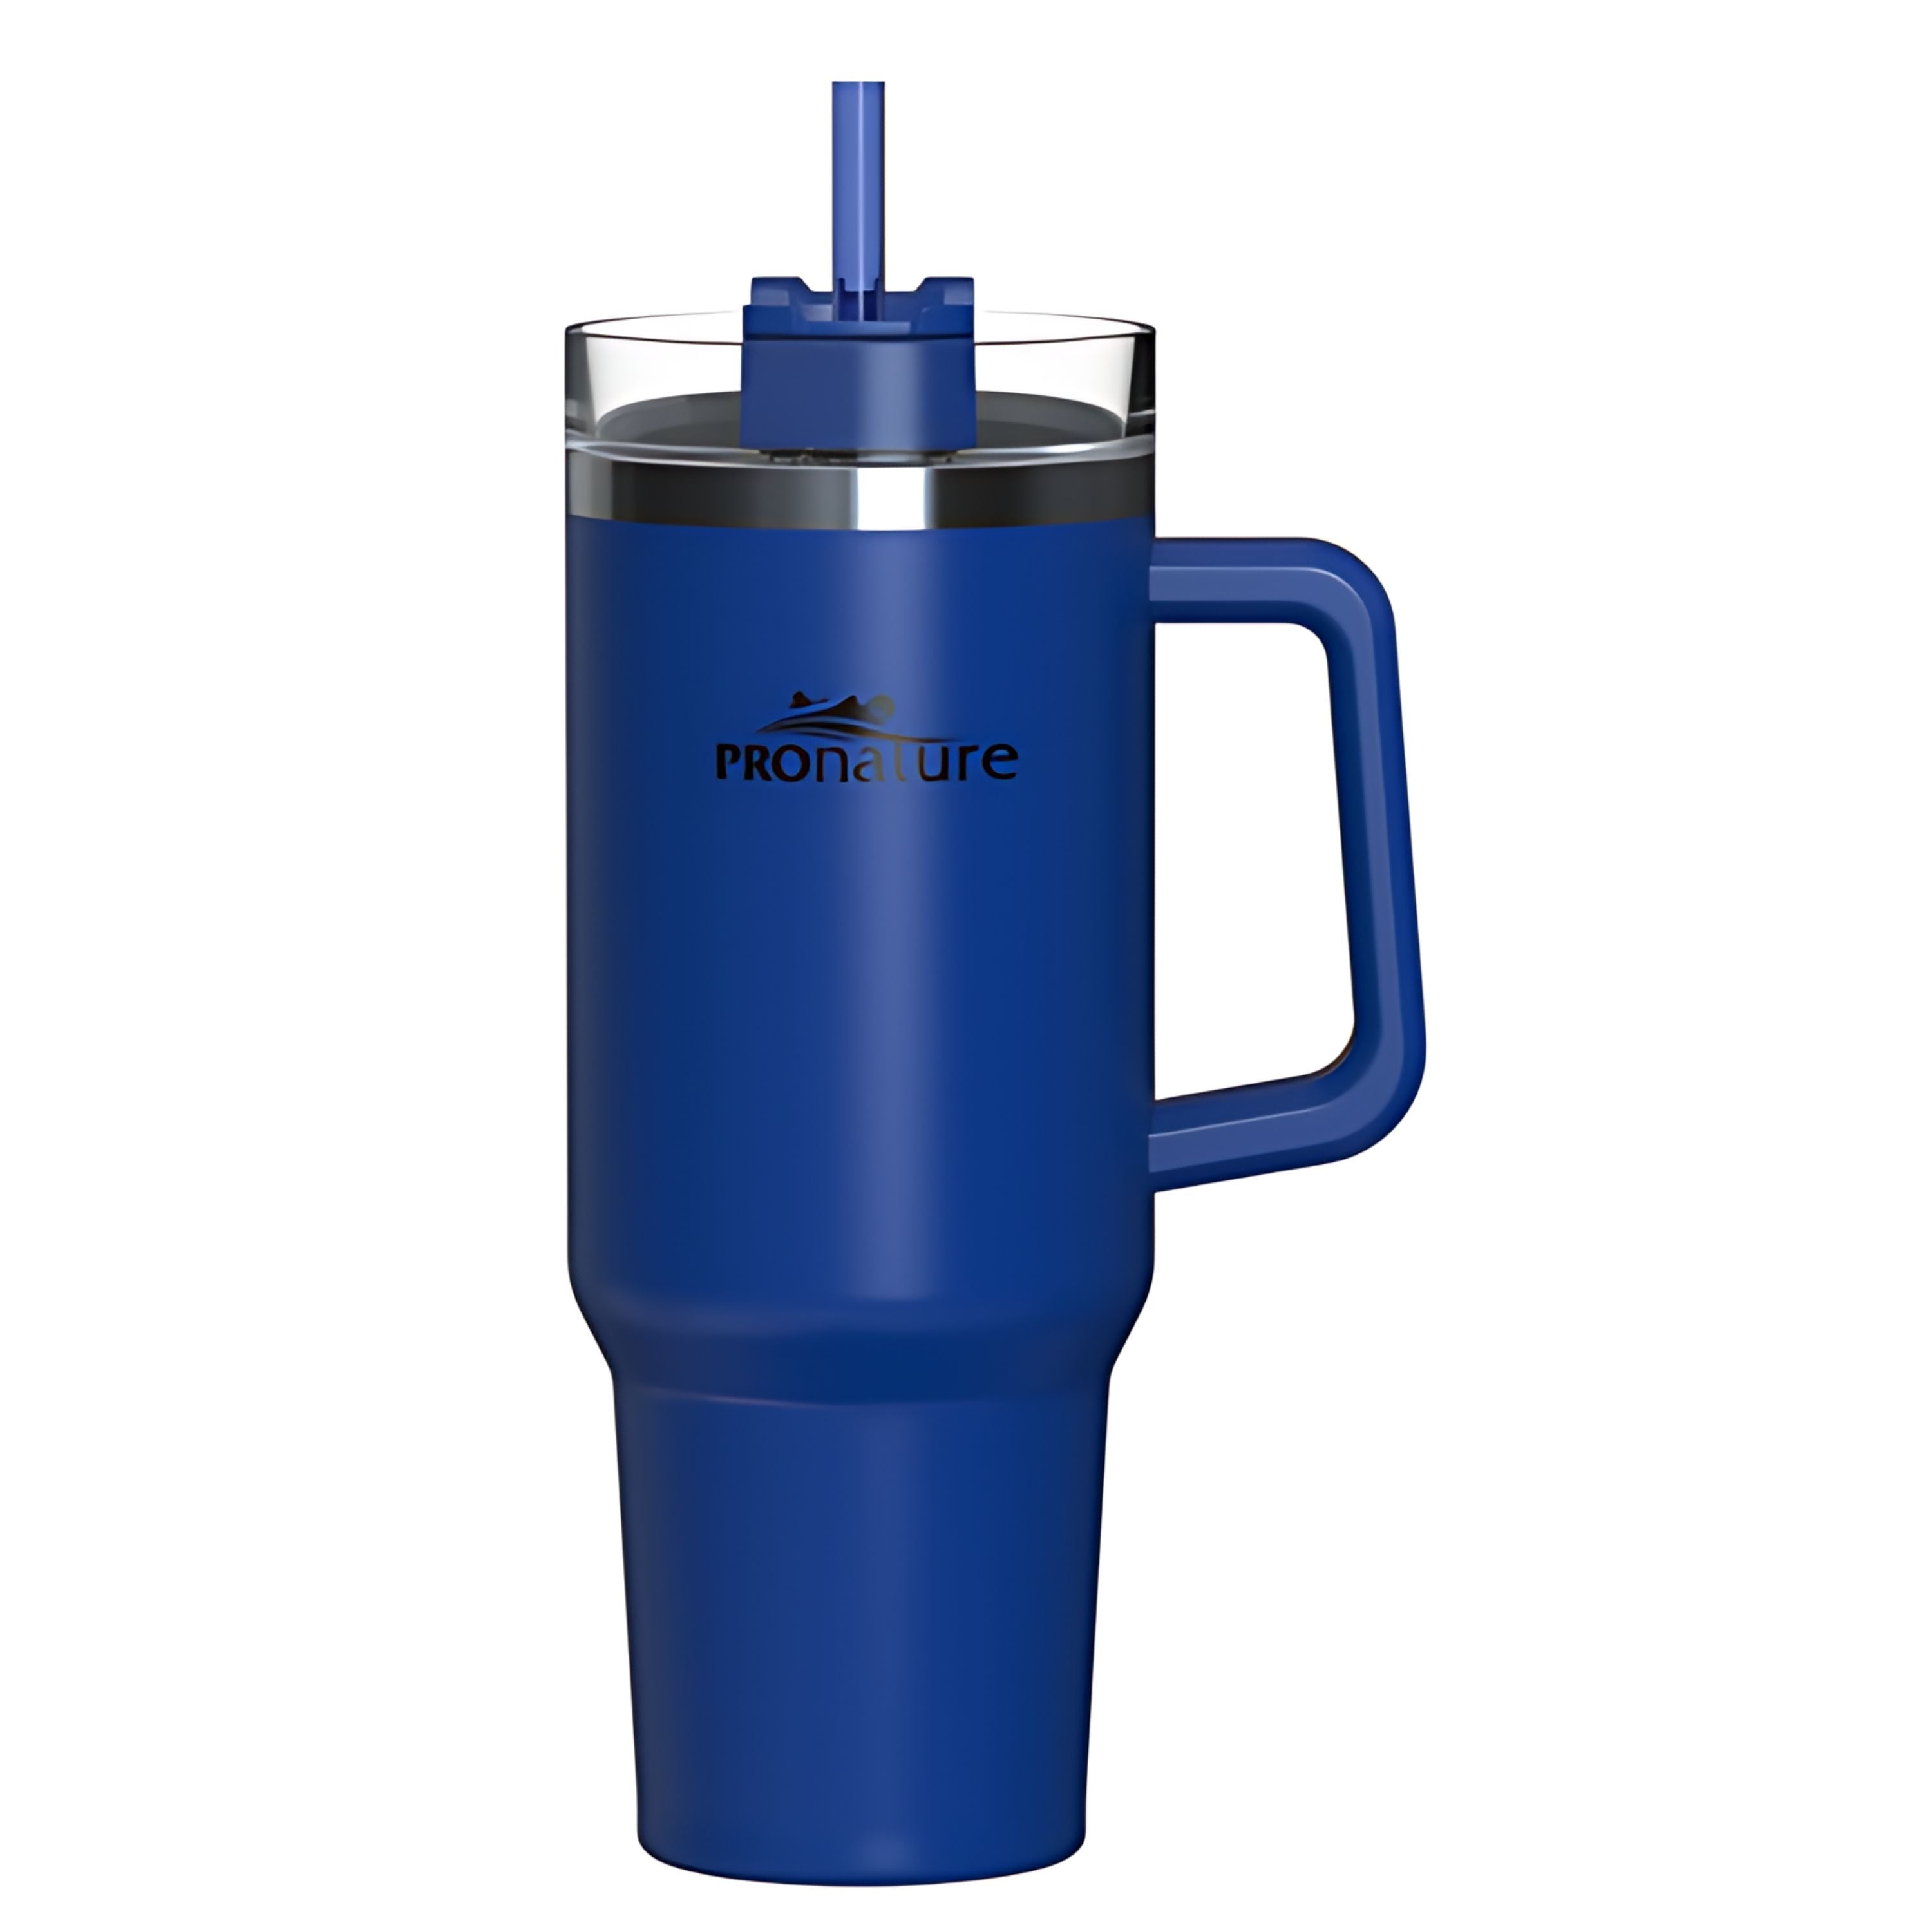 "Thirst" Insulated mug - 40 oz